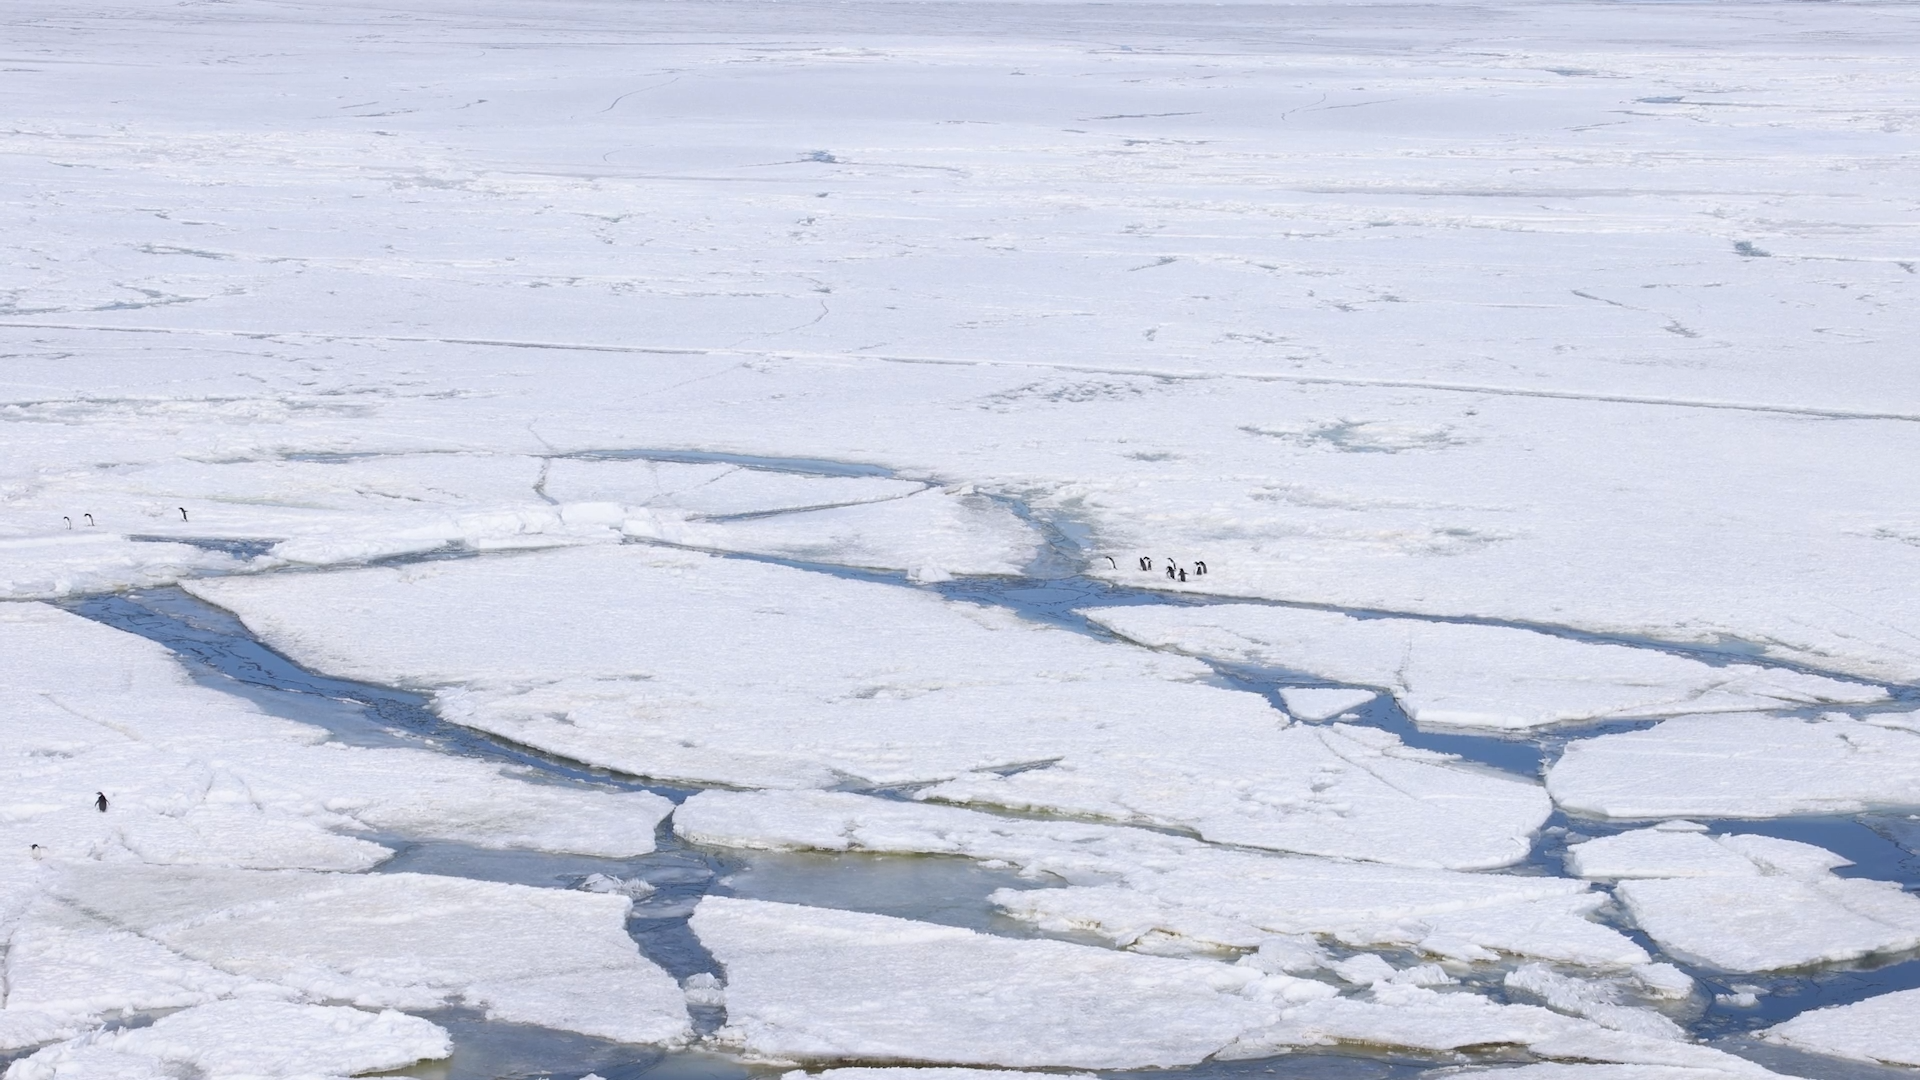 NZ scientists sound alarm over Antarctic sea ice lows – SMC Briefing